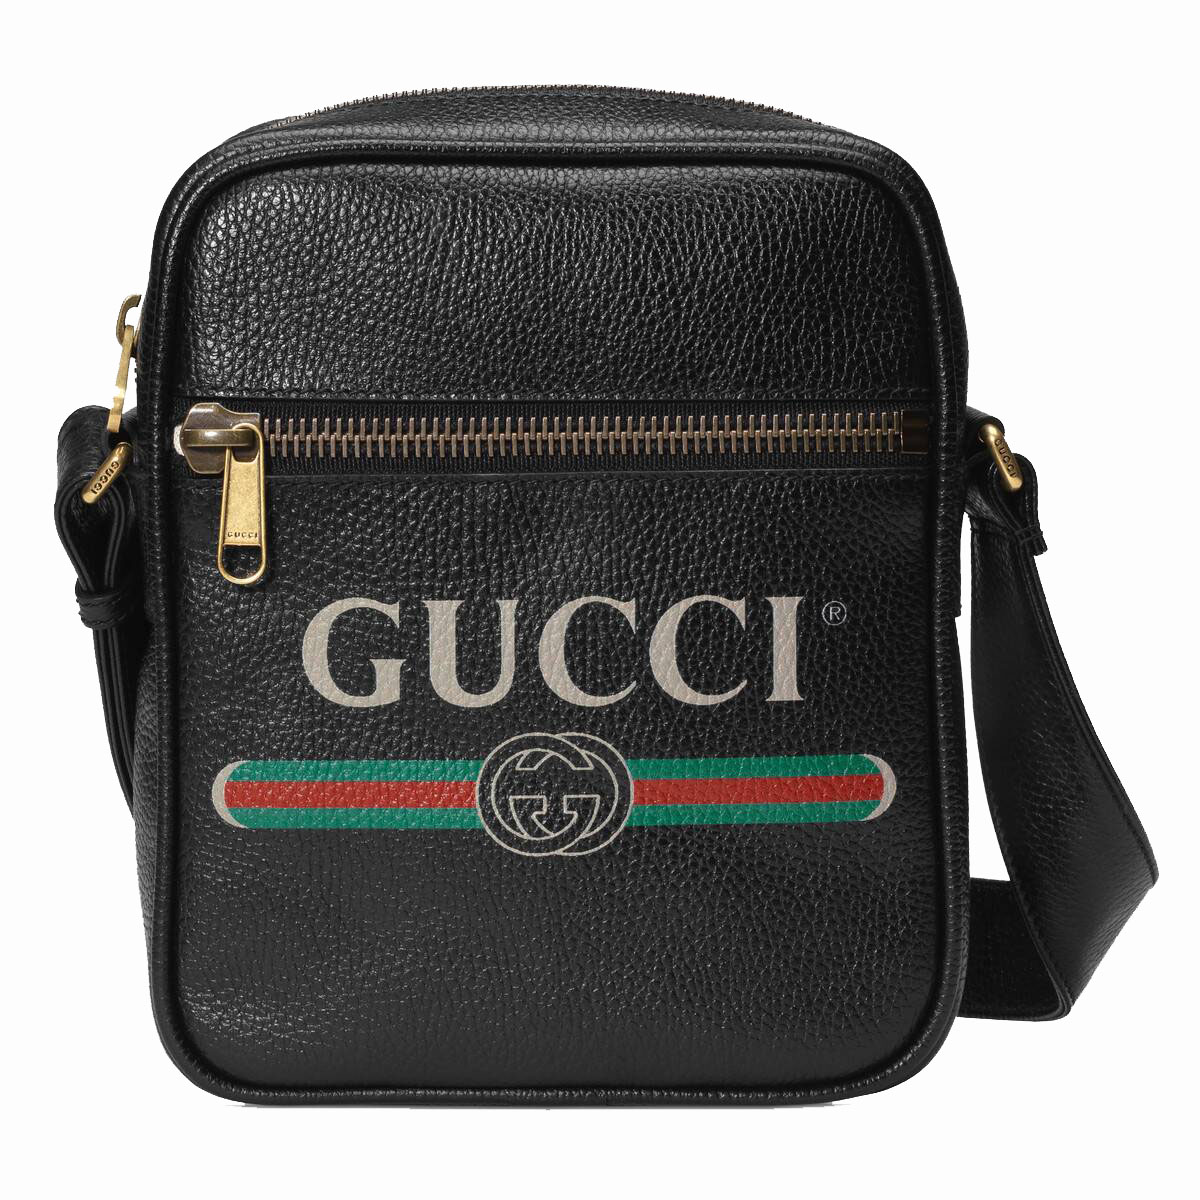 Gucci Print Messenger Bag Vintage Logo Black in Leather with Brass 